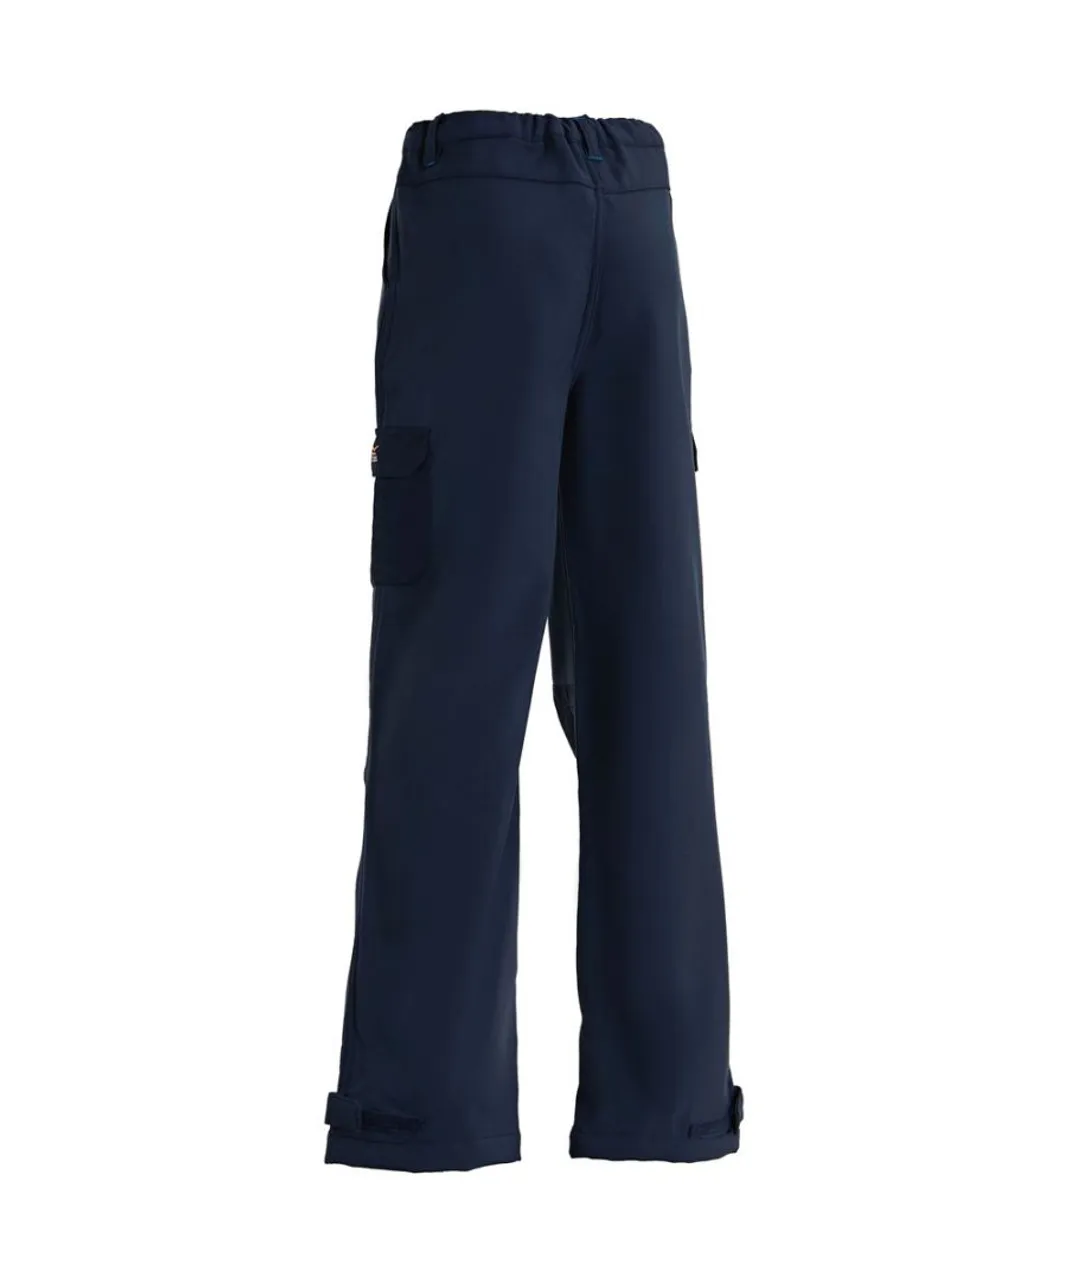 Regatta Boys & Girls Winter Softshell Wind Resistant Trousers - Navy